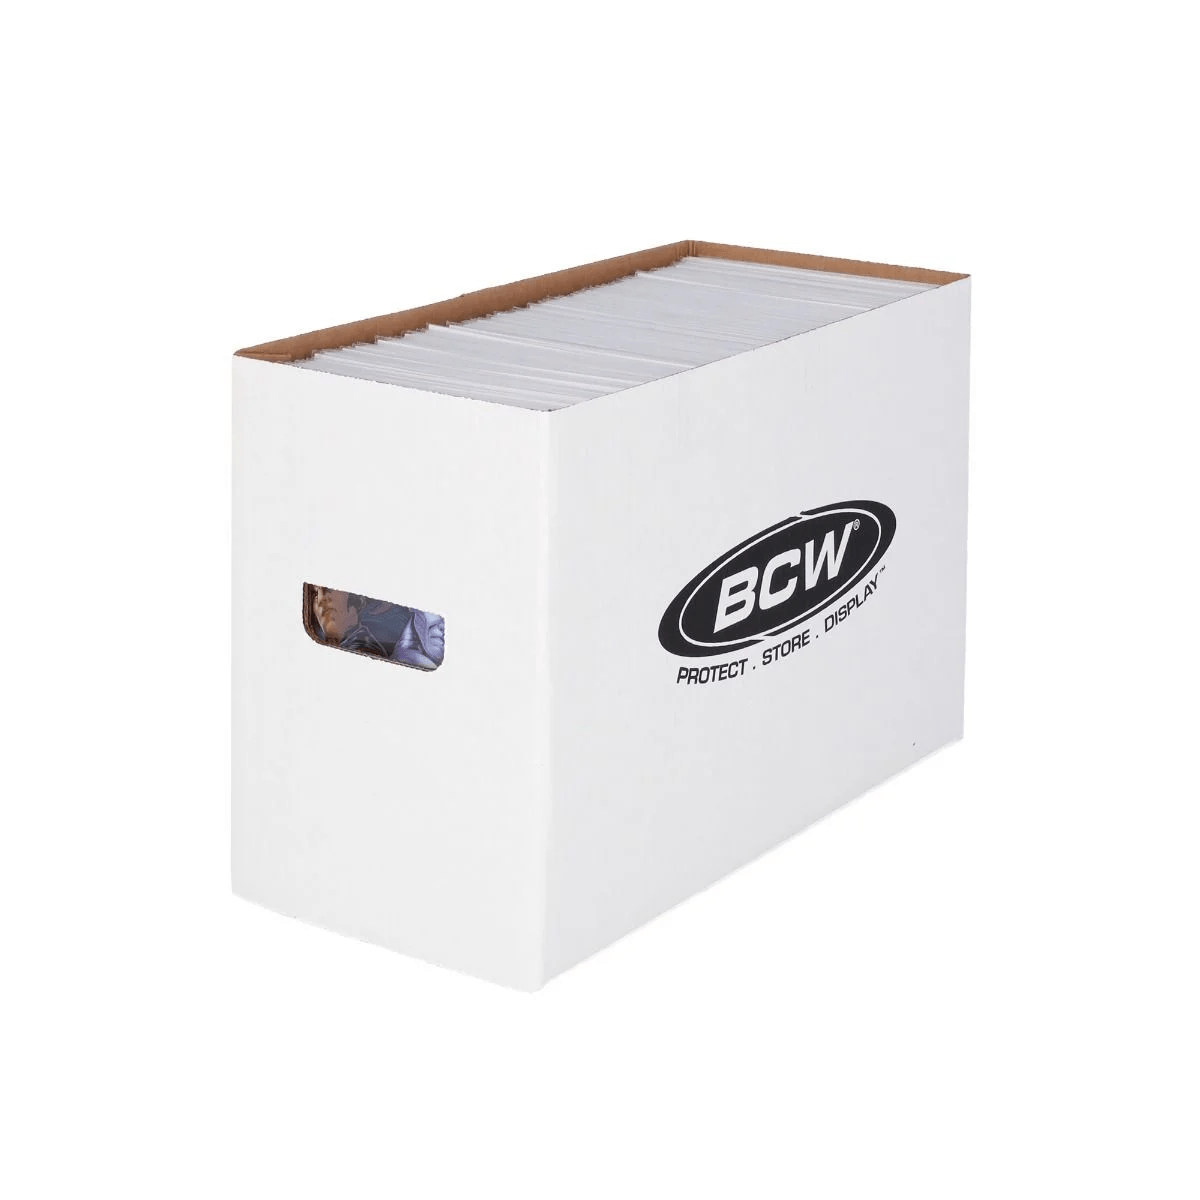 BCW Short Box w/ Lid